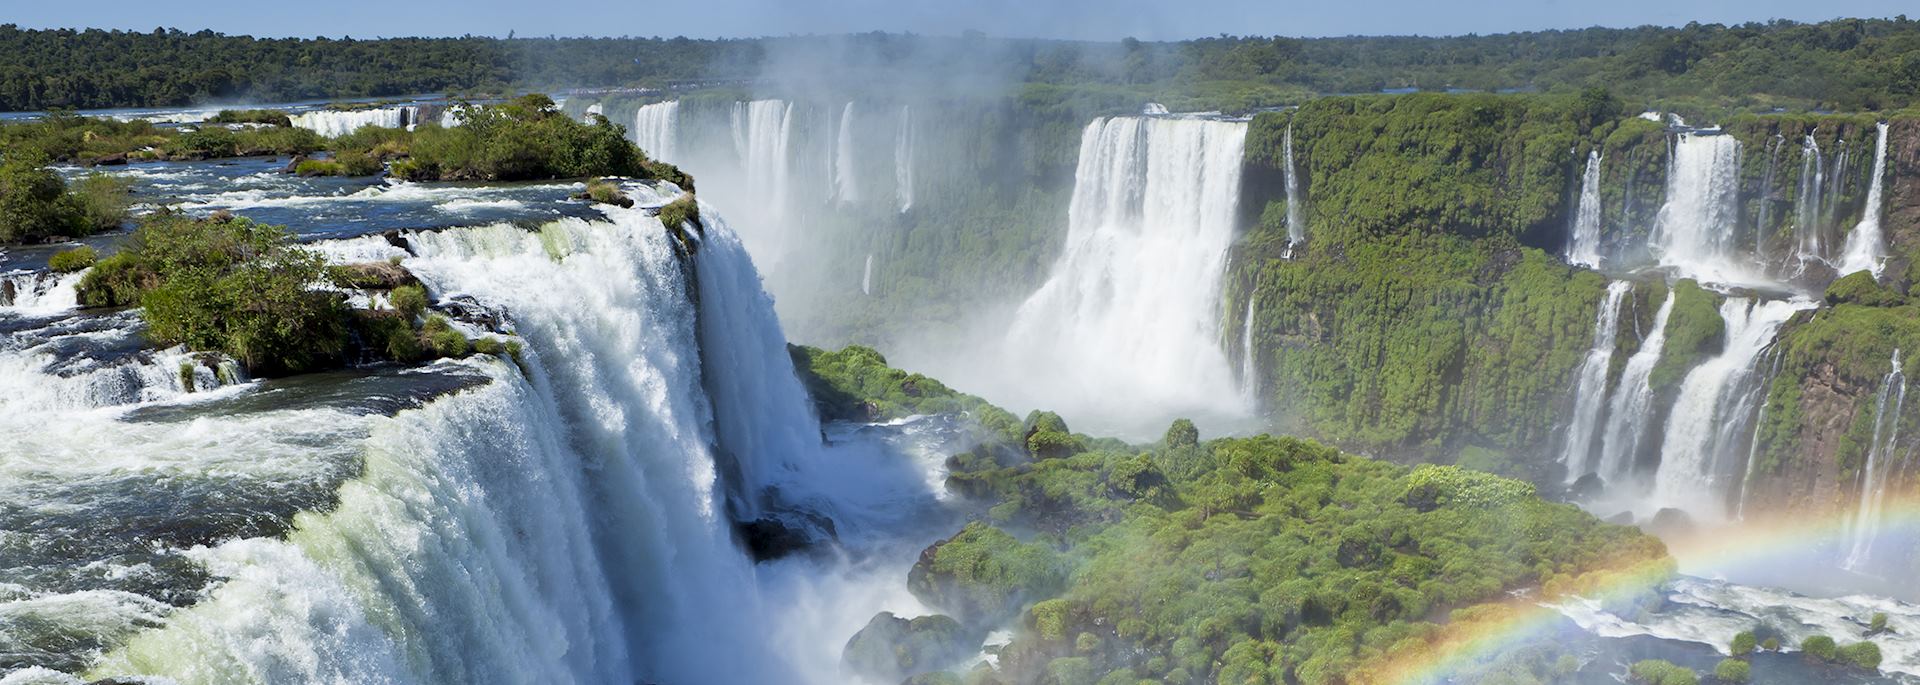 Iguazú Falls, Argentina